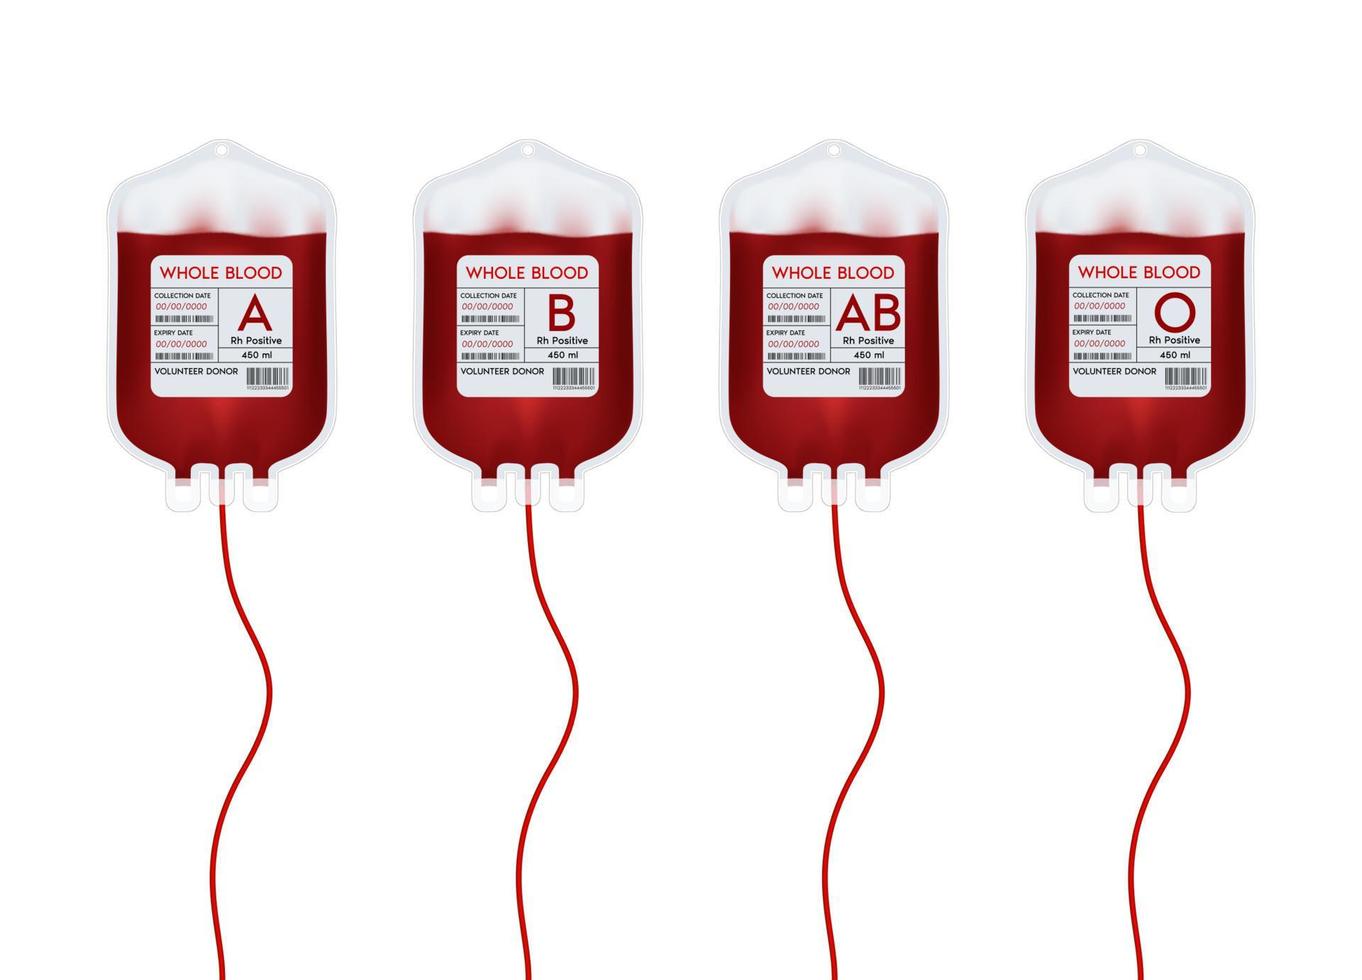 bolsa de sangre con etiqueta diferente grupo sanguíneo a, b, o y sistema rh. Ideas de donación de sangre para ayudar a los médicos lesionados. 3d vector eps10 ilustración